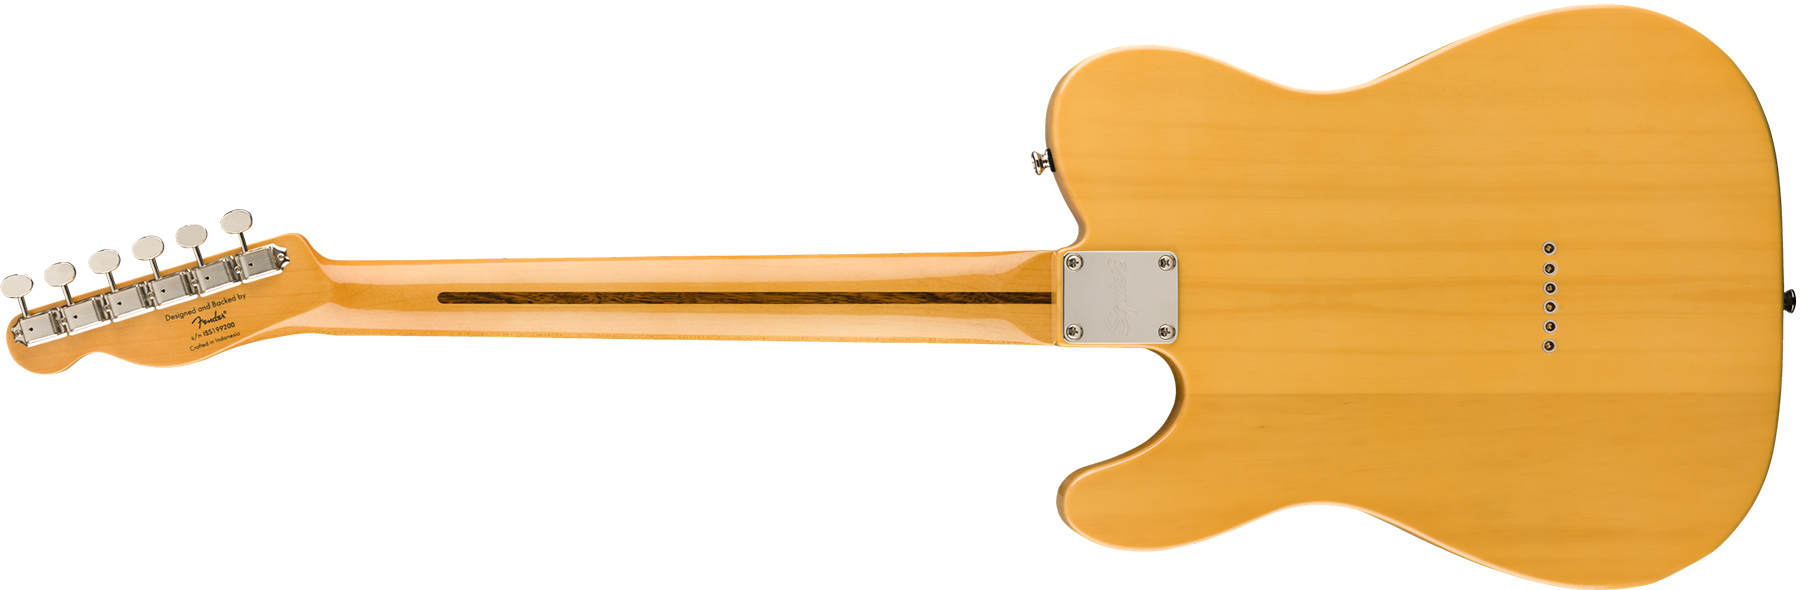 Squier Tele '50s Classic Vibe 2019 Mn - Butterscotch Blonde - Televorm elektrische gitaar - Variation 1